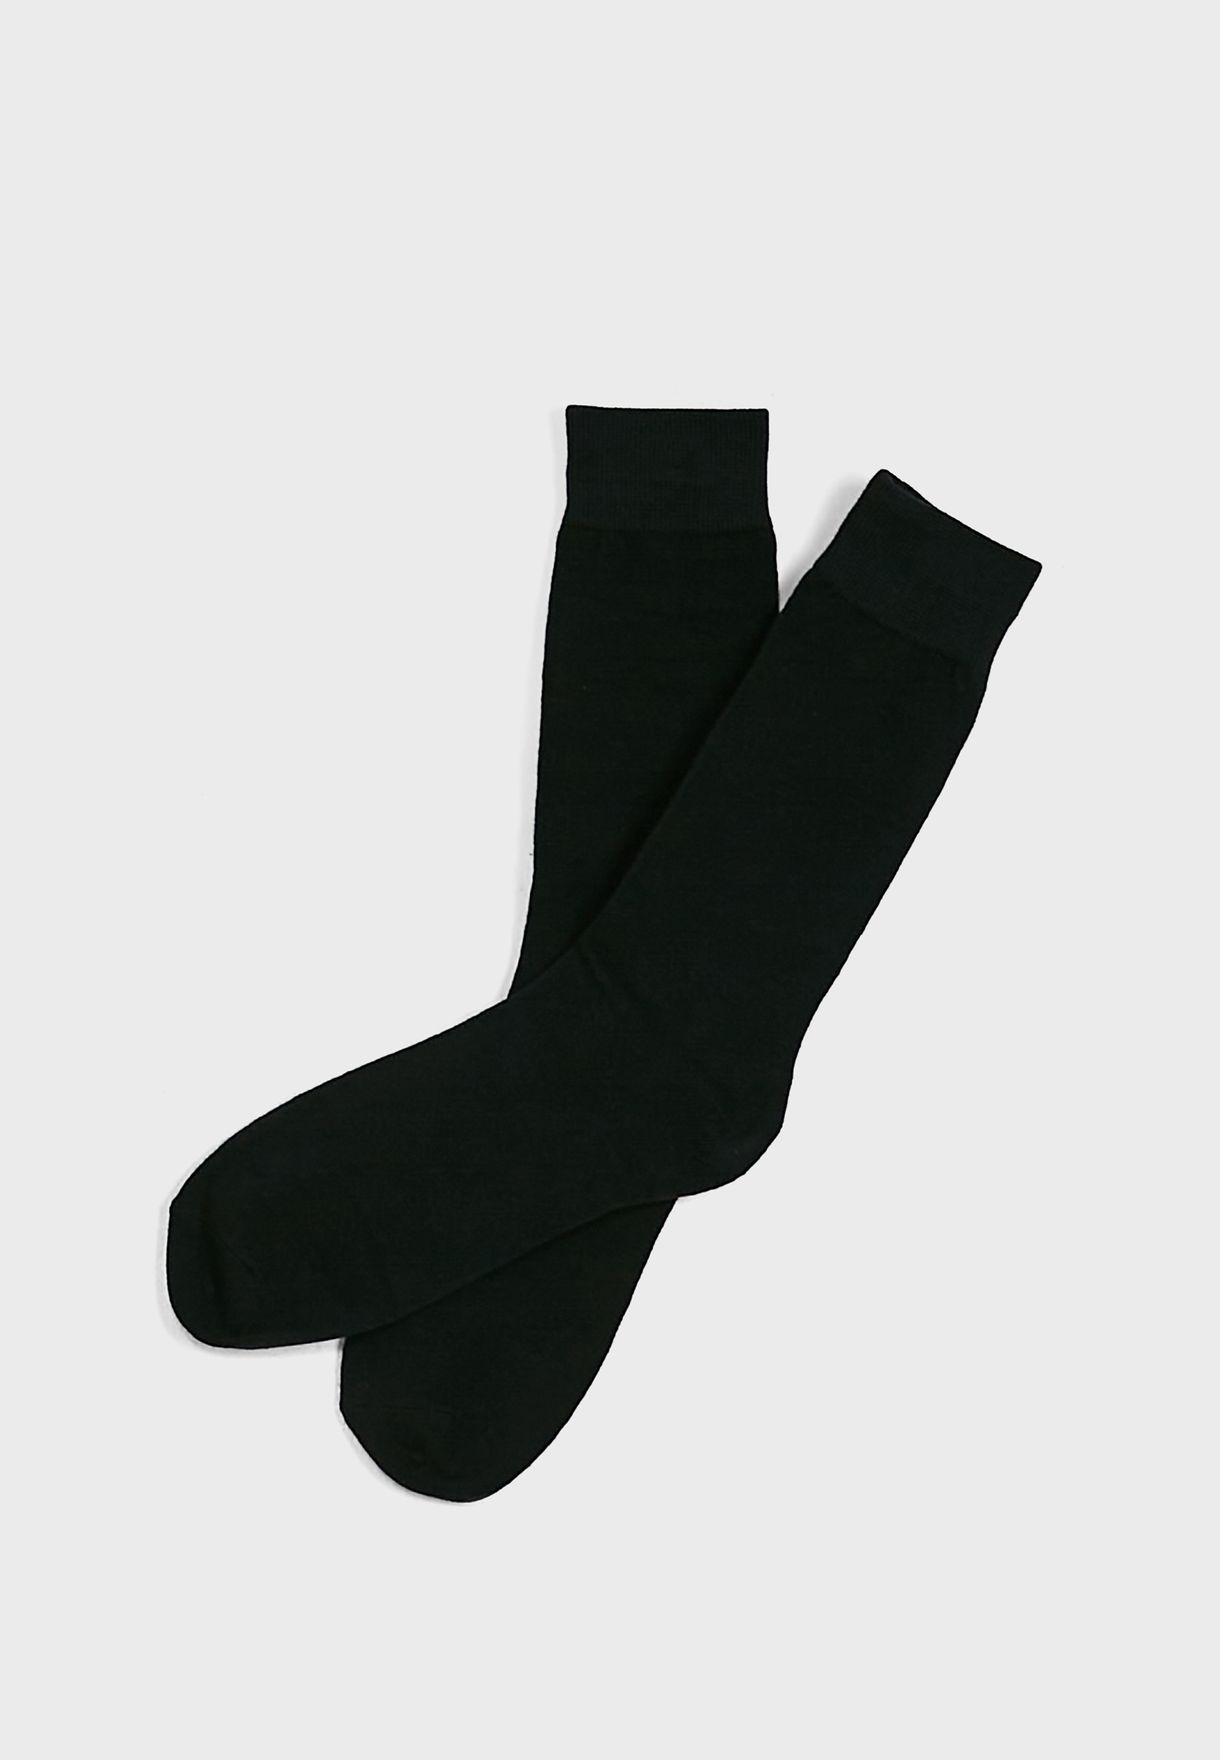 Essential Shorts & Sock Set